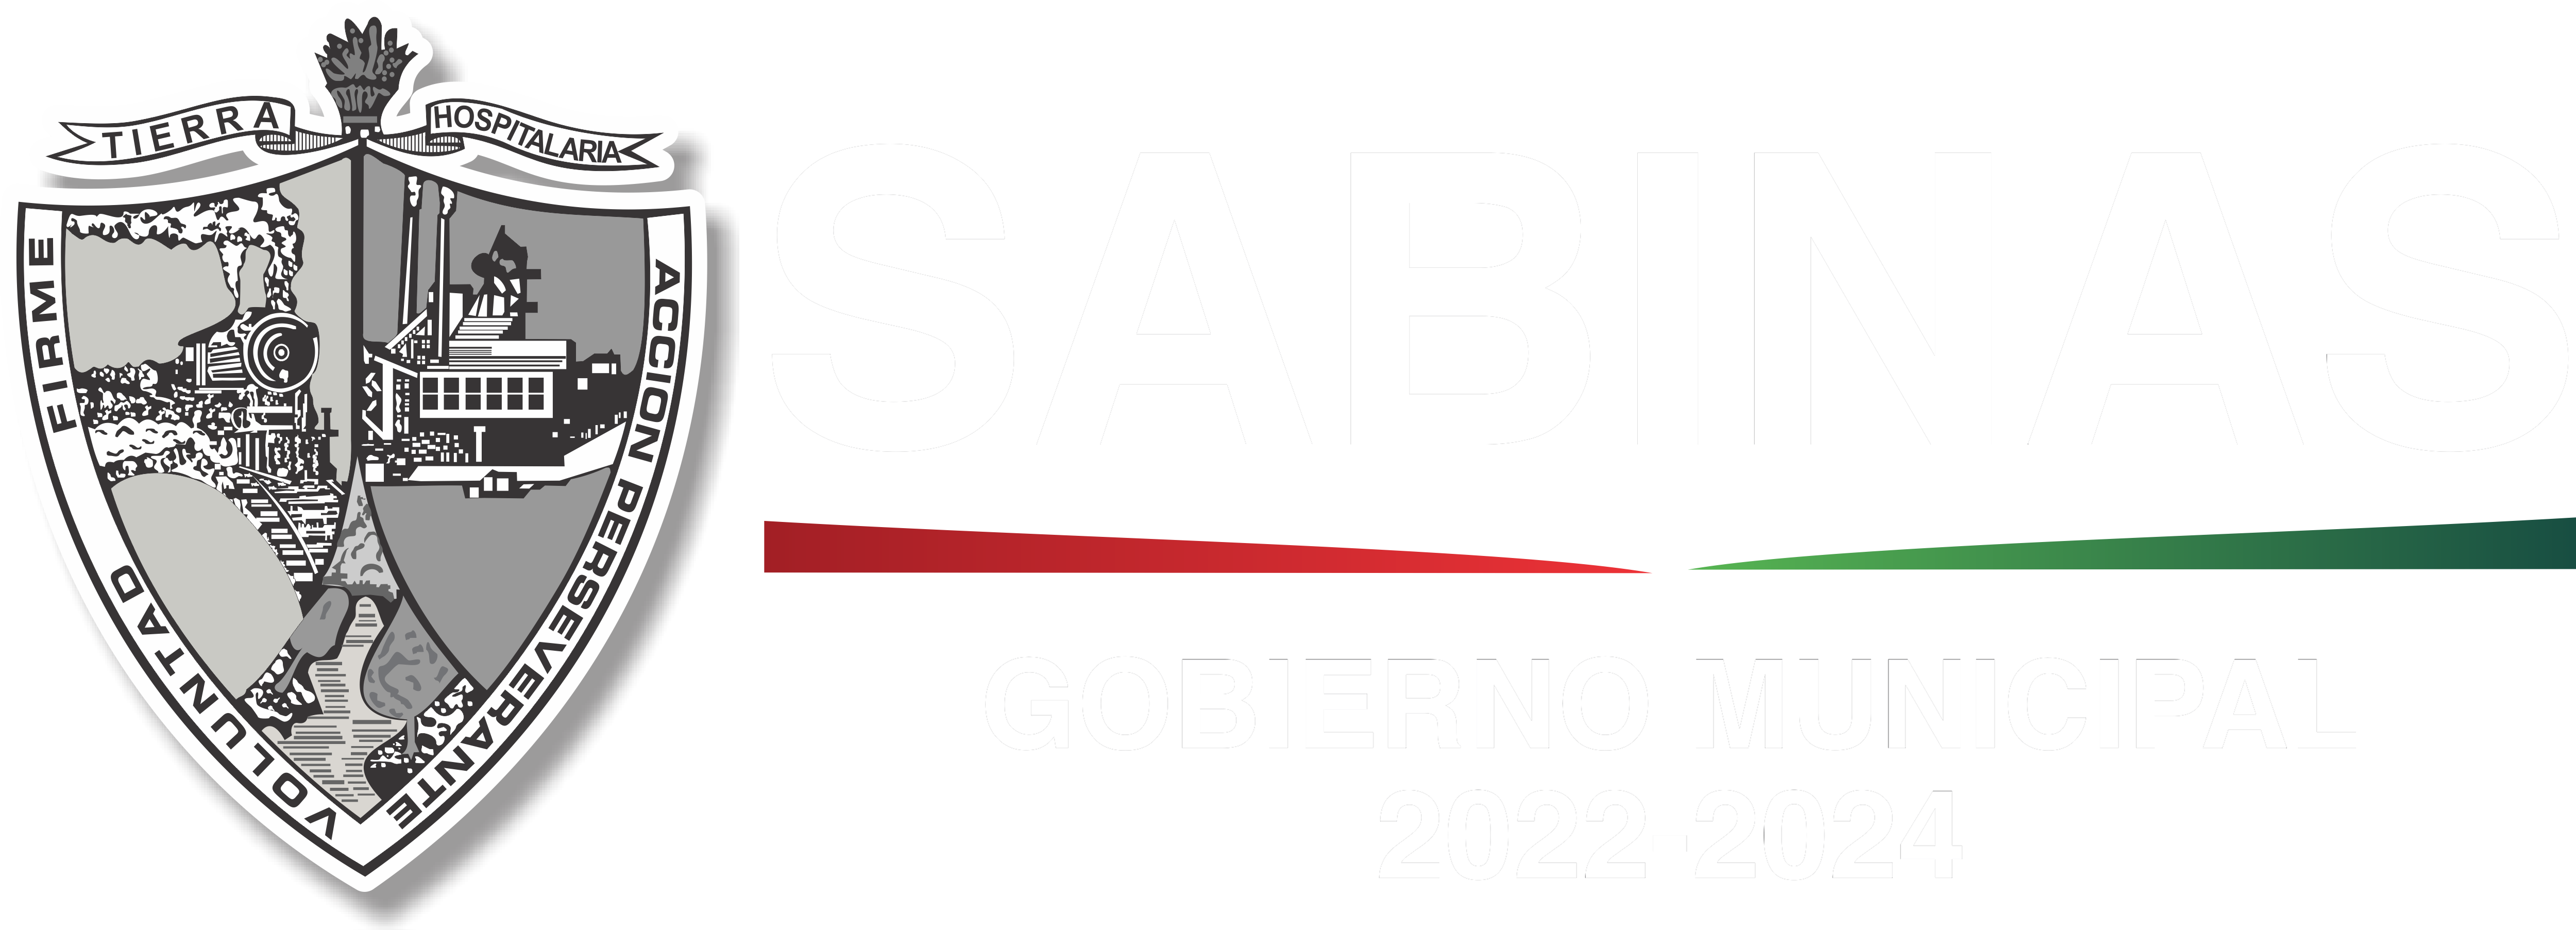 Sabinas Coahuila